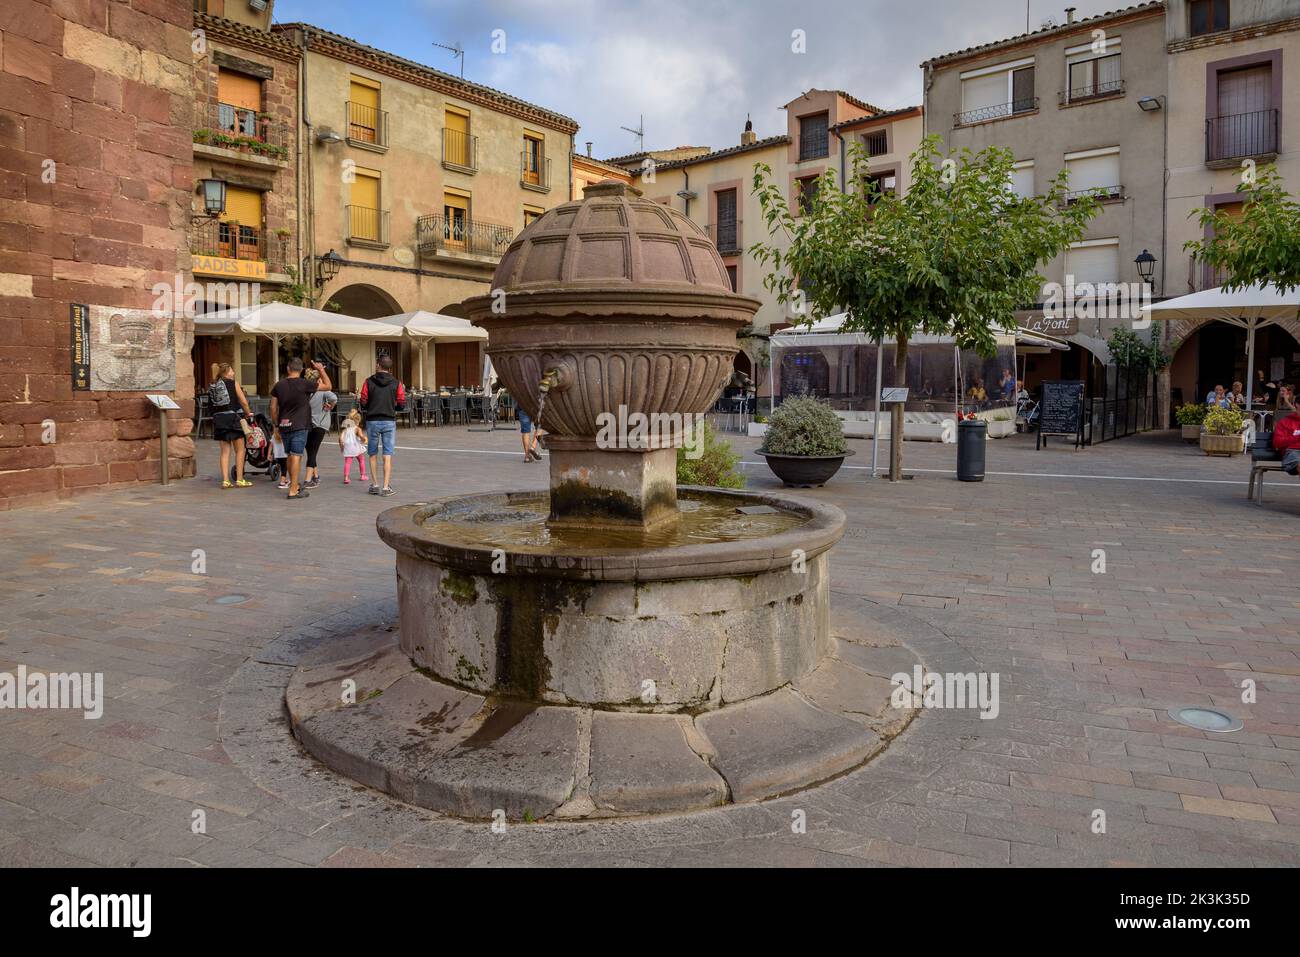 Fontaine Renaissance sur la place principale de Prades (Baix Camp, Tarragone, Catalogne, Espagne) ESP: Fuente renacentista de la plaza Mayor de Prades España Banque D'Images